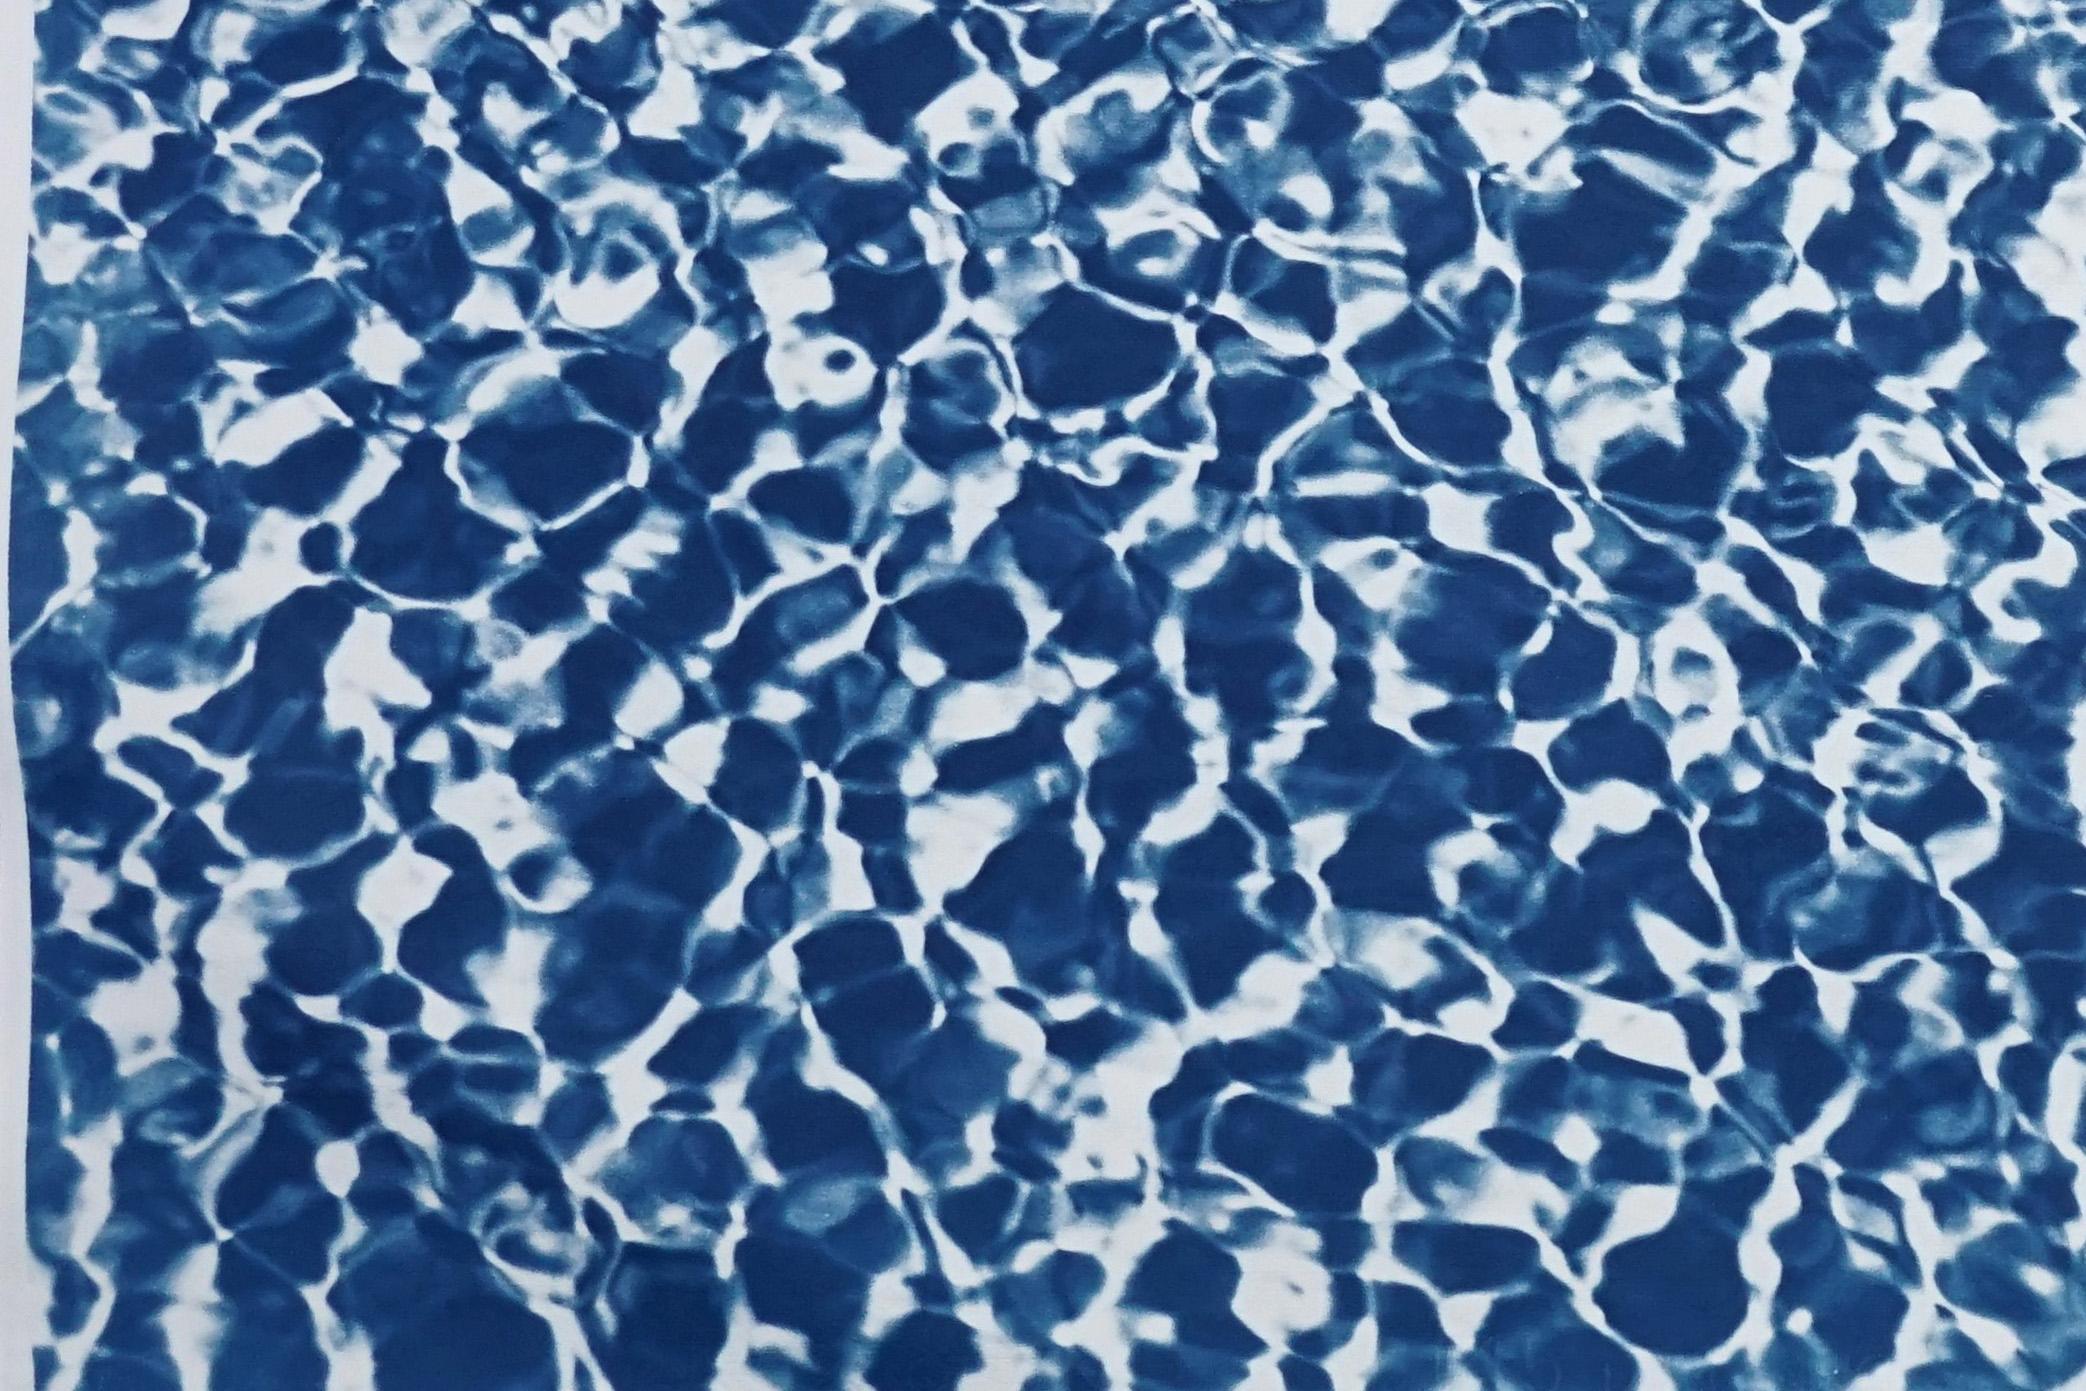 Infinity Pool Water Reflections, Blue & White Pattern, Handmade Cyanotype Print 1